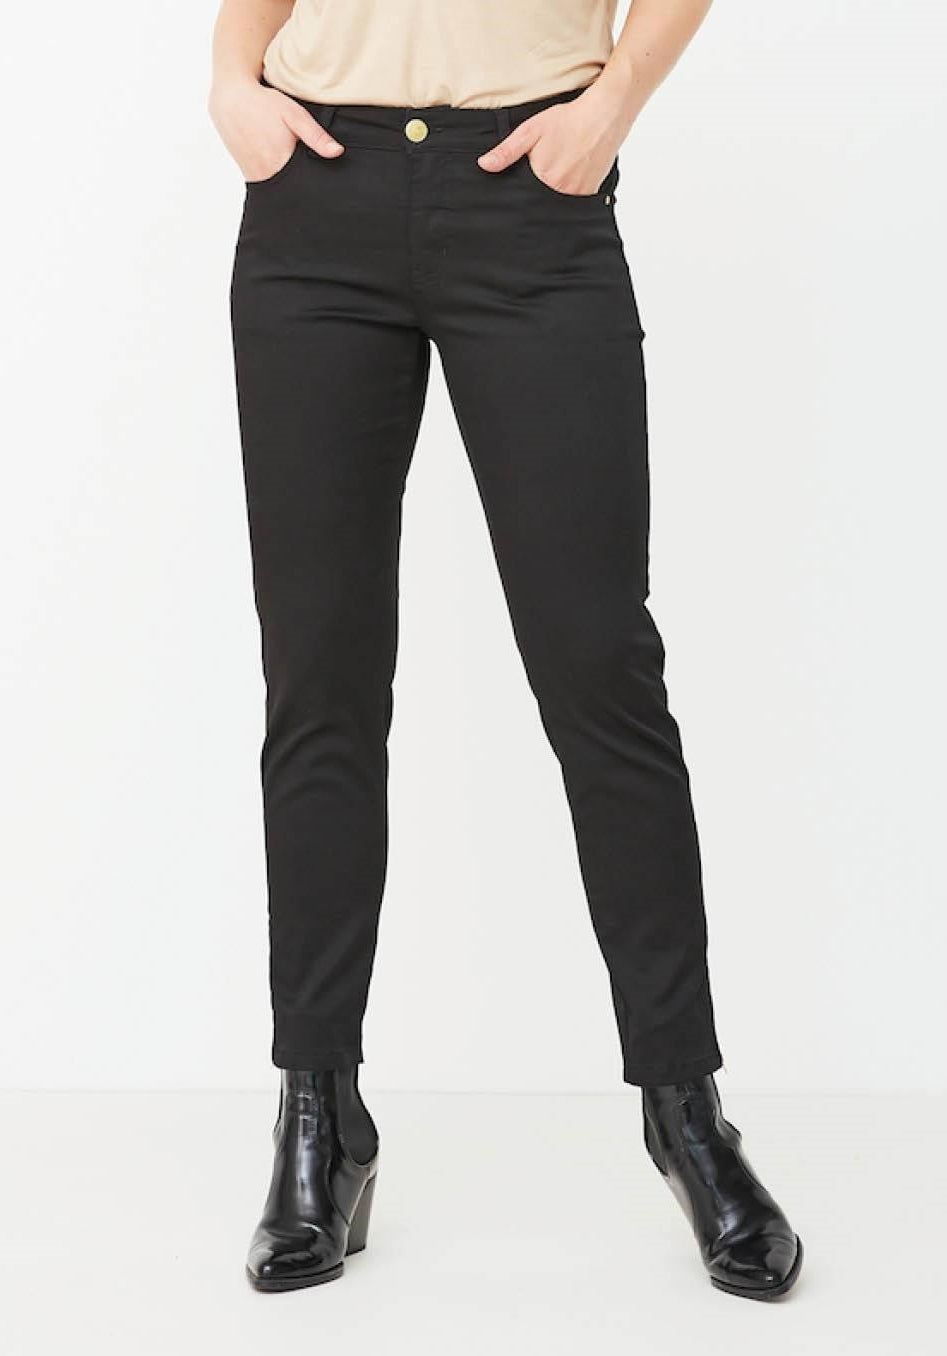 Jeans Lido zip, black